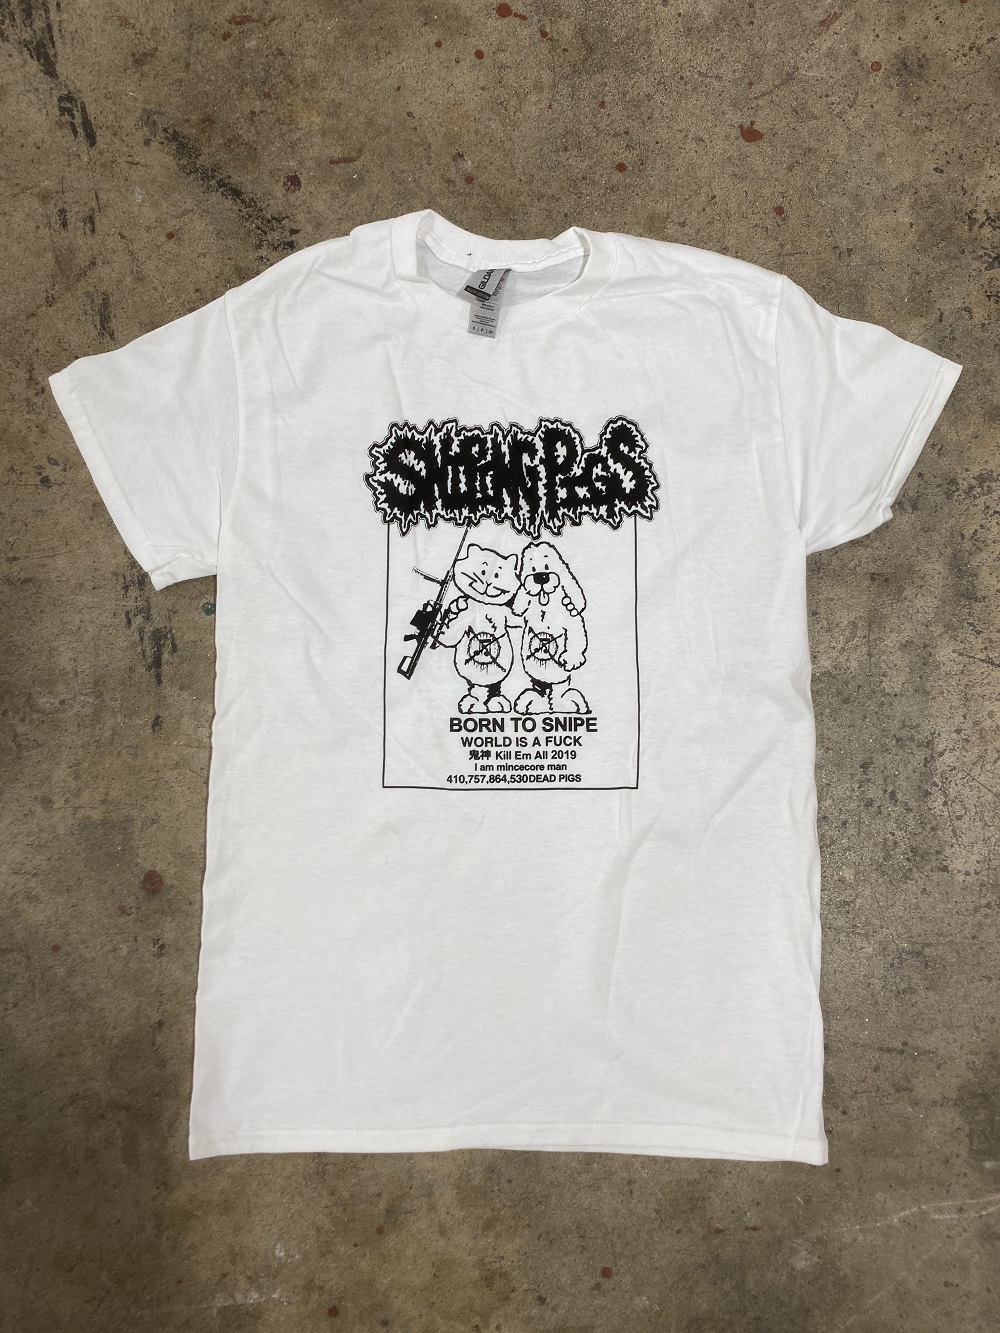 Sniping Pigs - Born To Snipe Shirt (XXL)